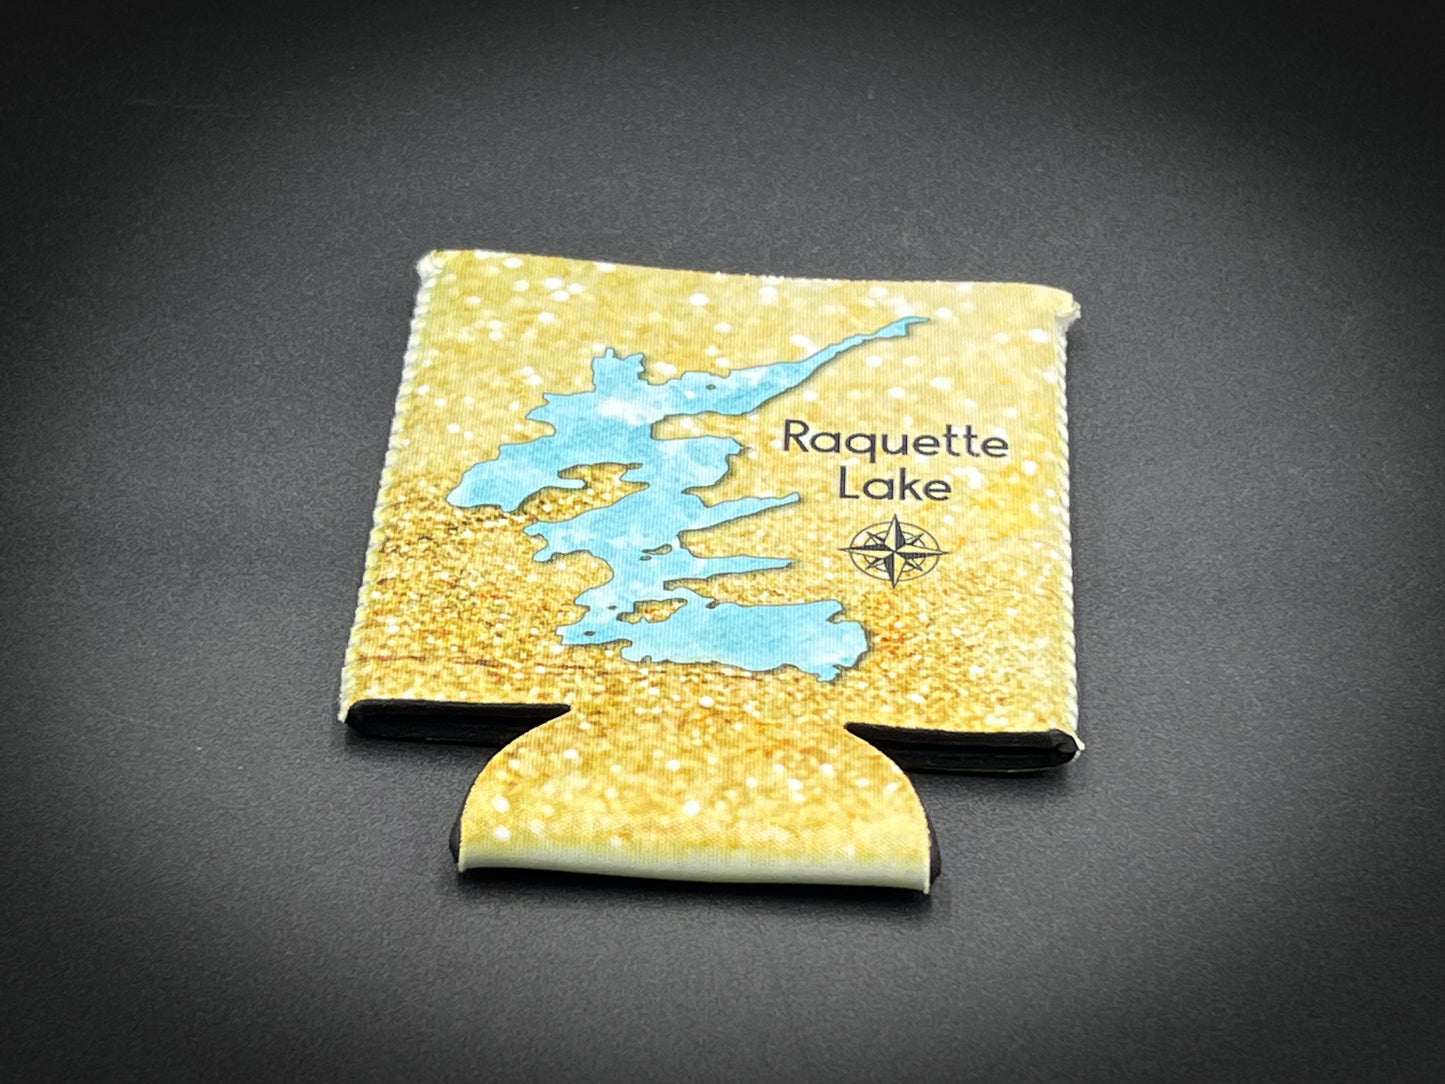 Raquette Lake - Suncity Collection lake cozies